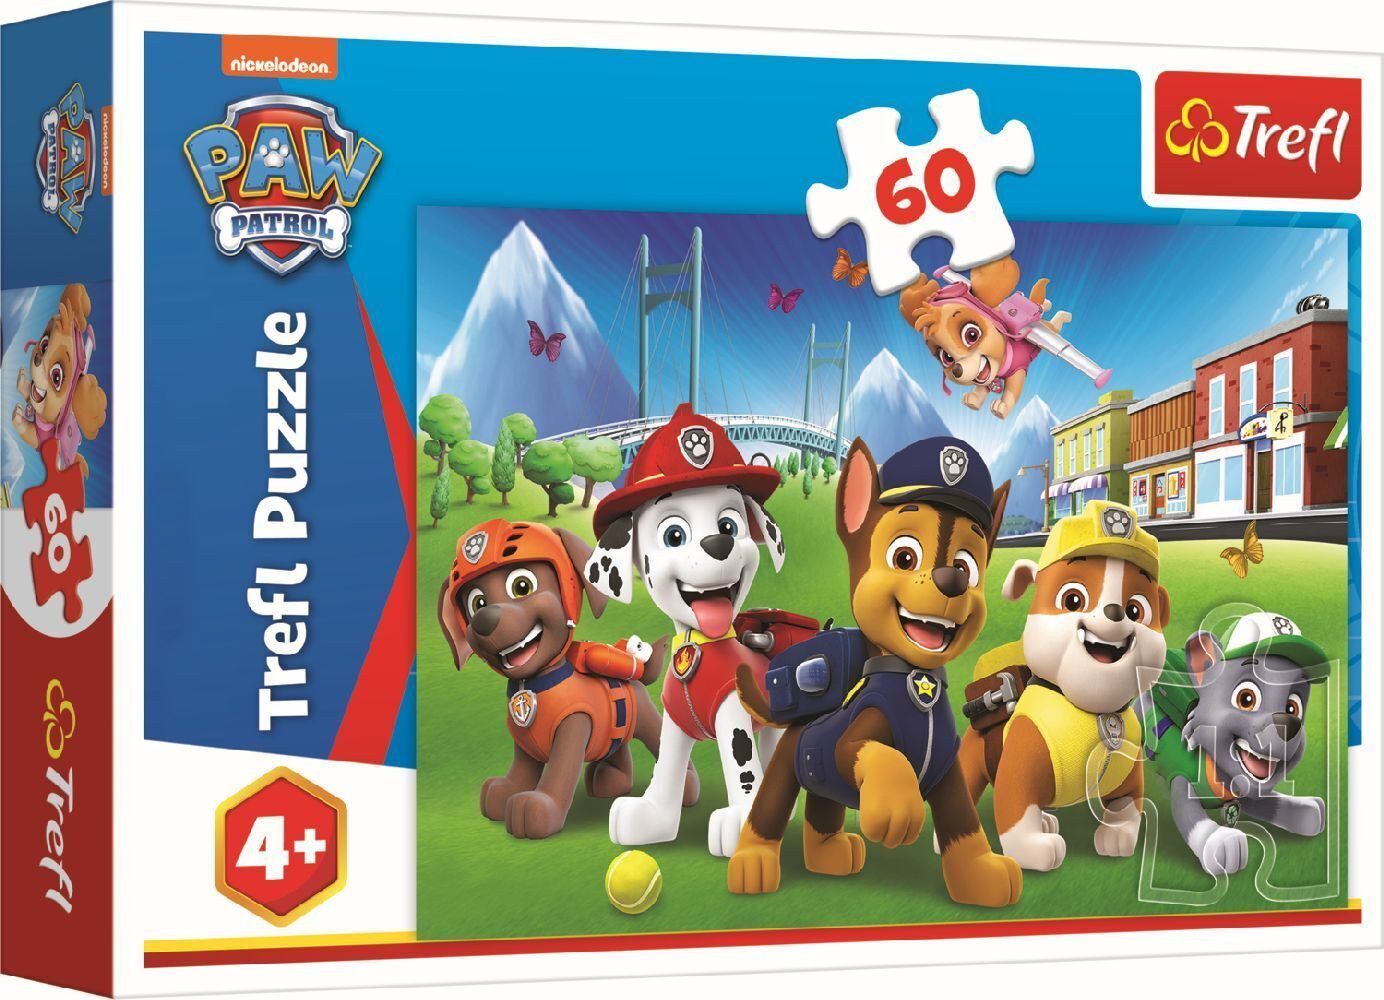 Trefl Puzzle Puzzle 60 PAW Patrol (Kinderpuzzle), 99 Puzzleteile